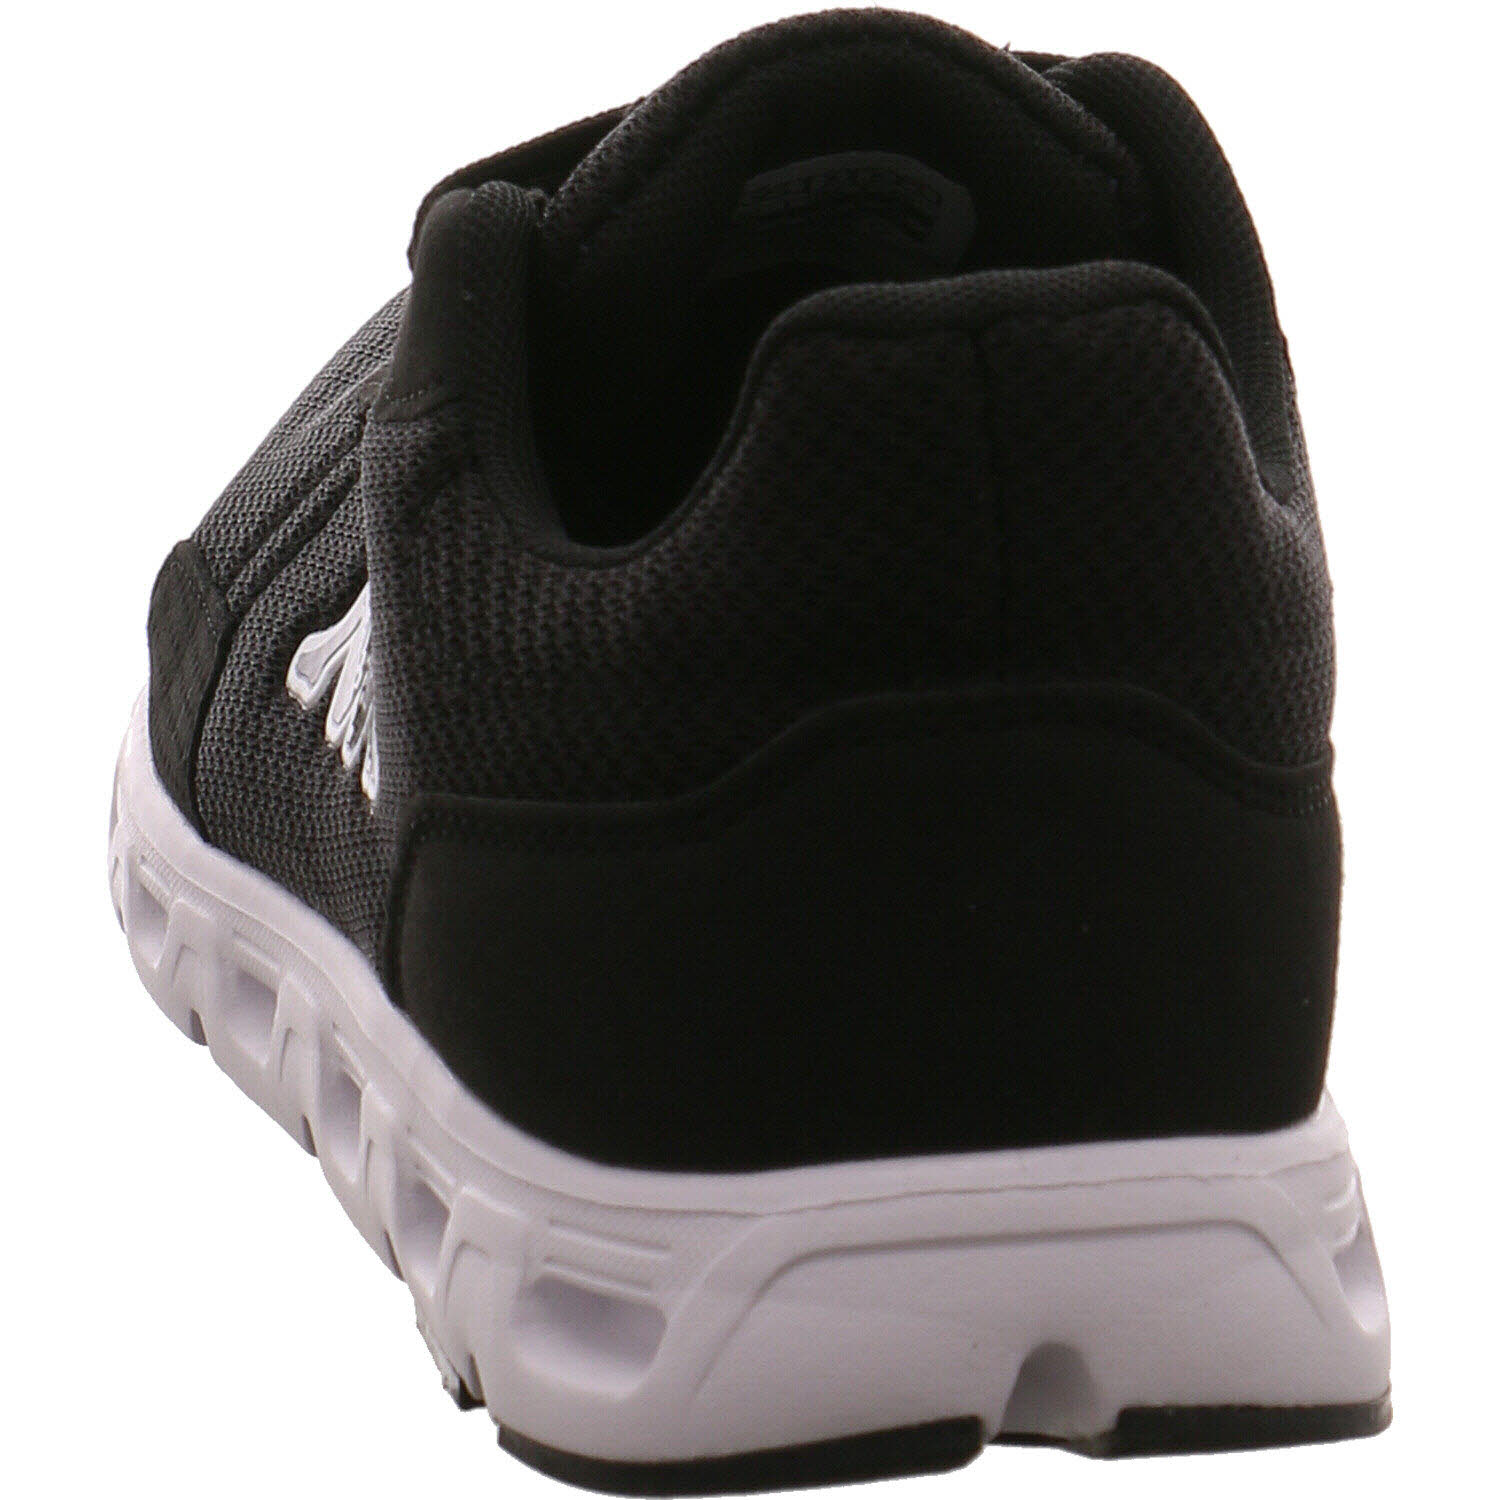 | Kappa Shoes 243102 in Sneaker Stylecode: Getup schwarz/weiß low P&P